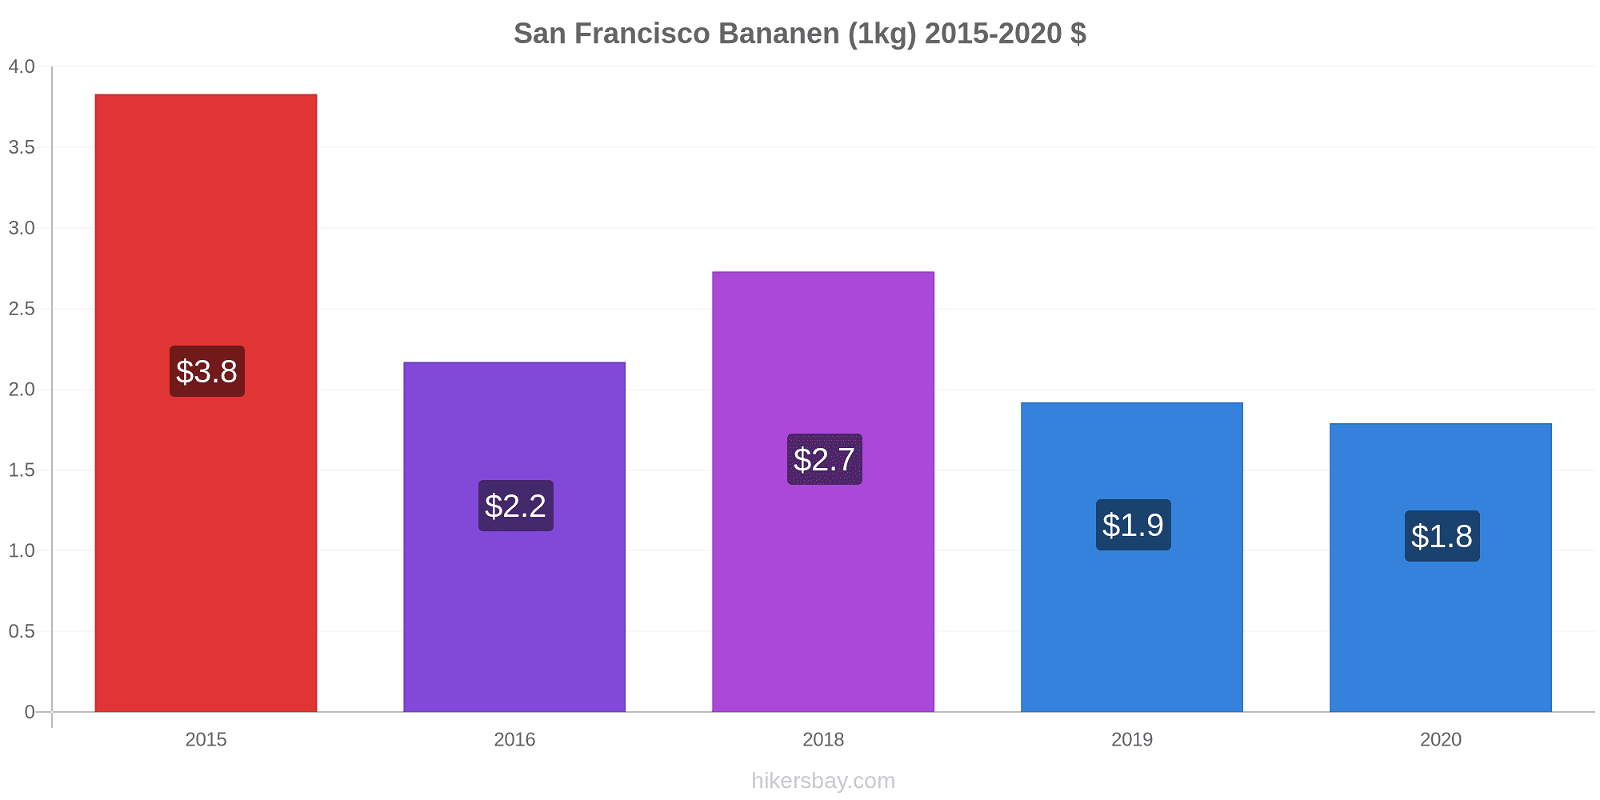 San Francisco Preisänderungen Banane (1kg) hikersbay.com